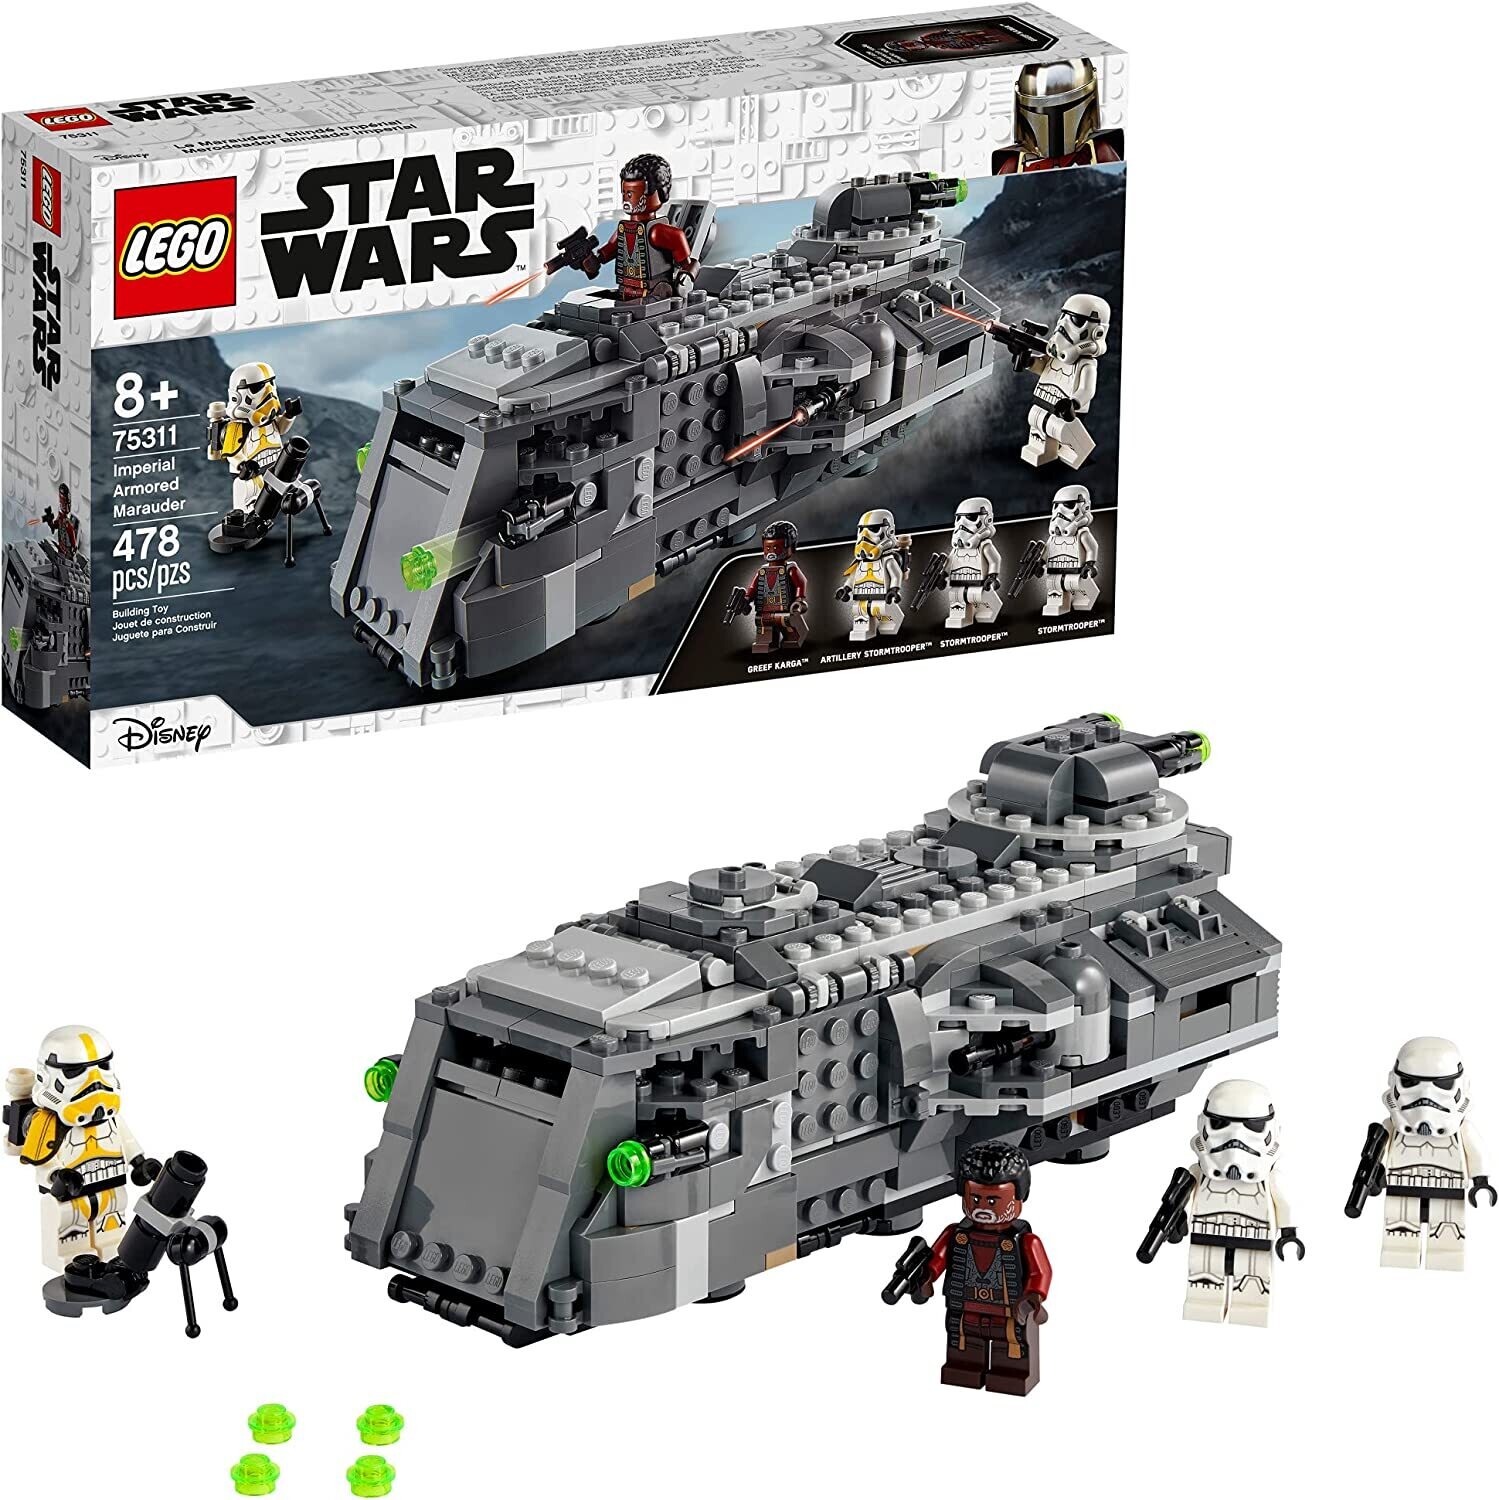 Lego 75311 Imperial Armored Marauder